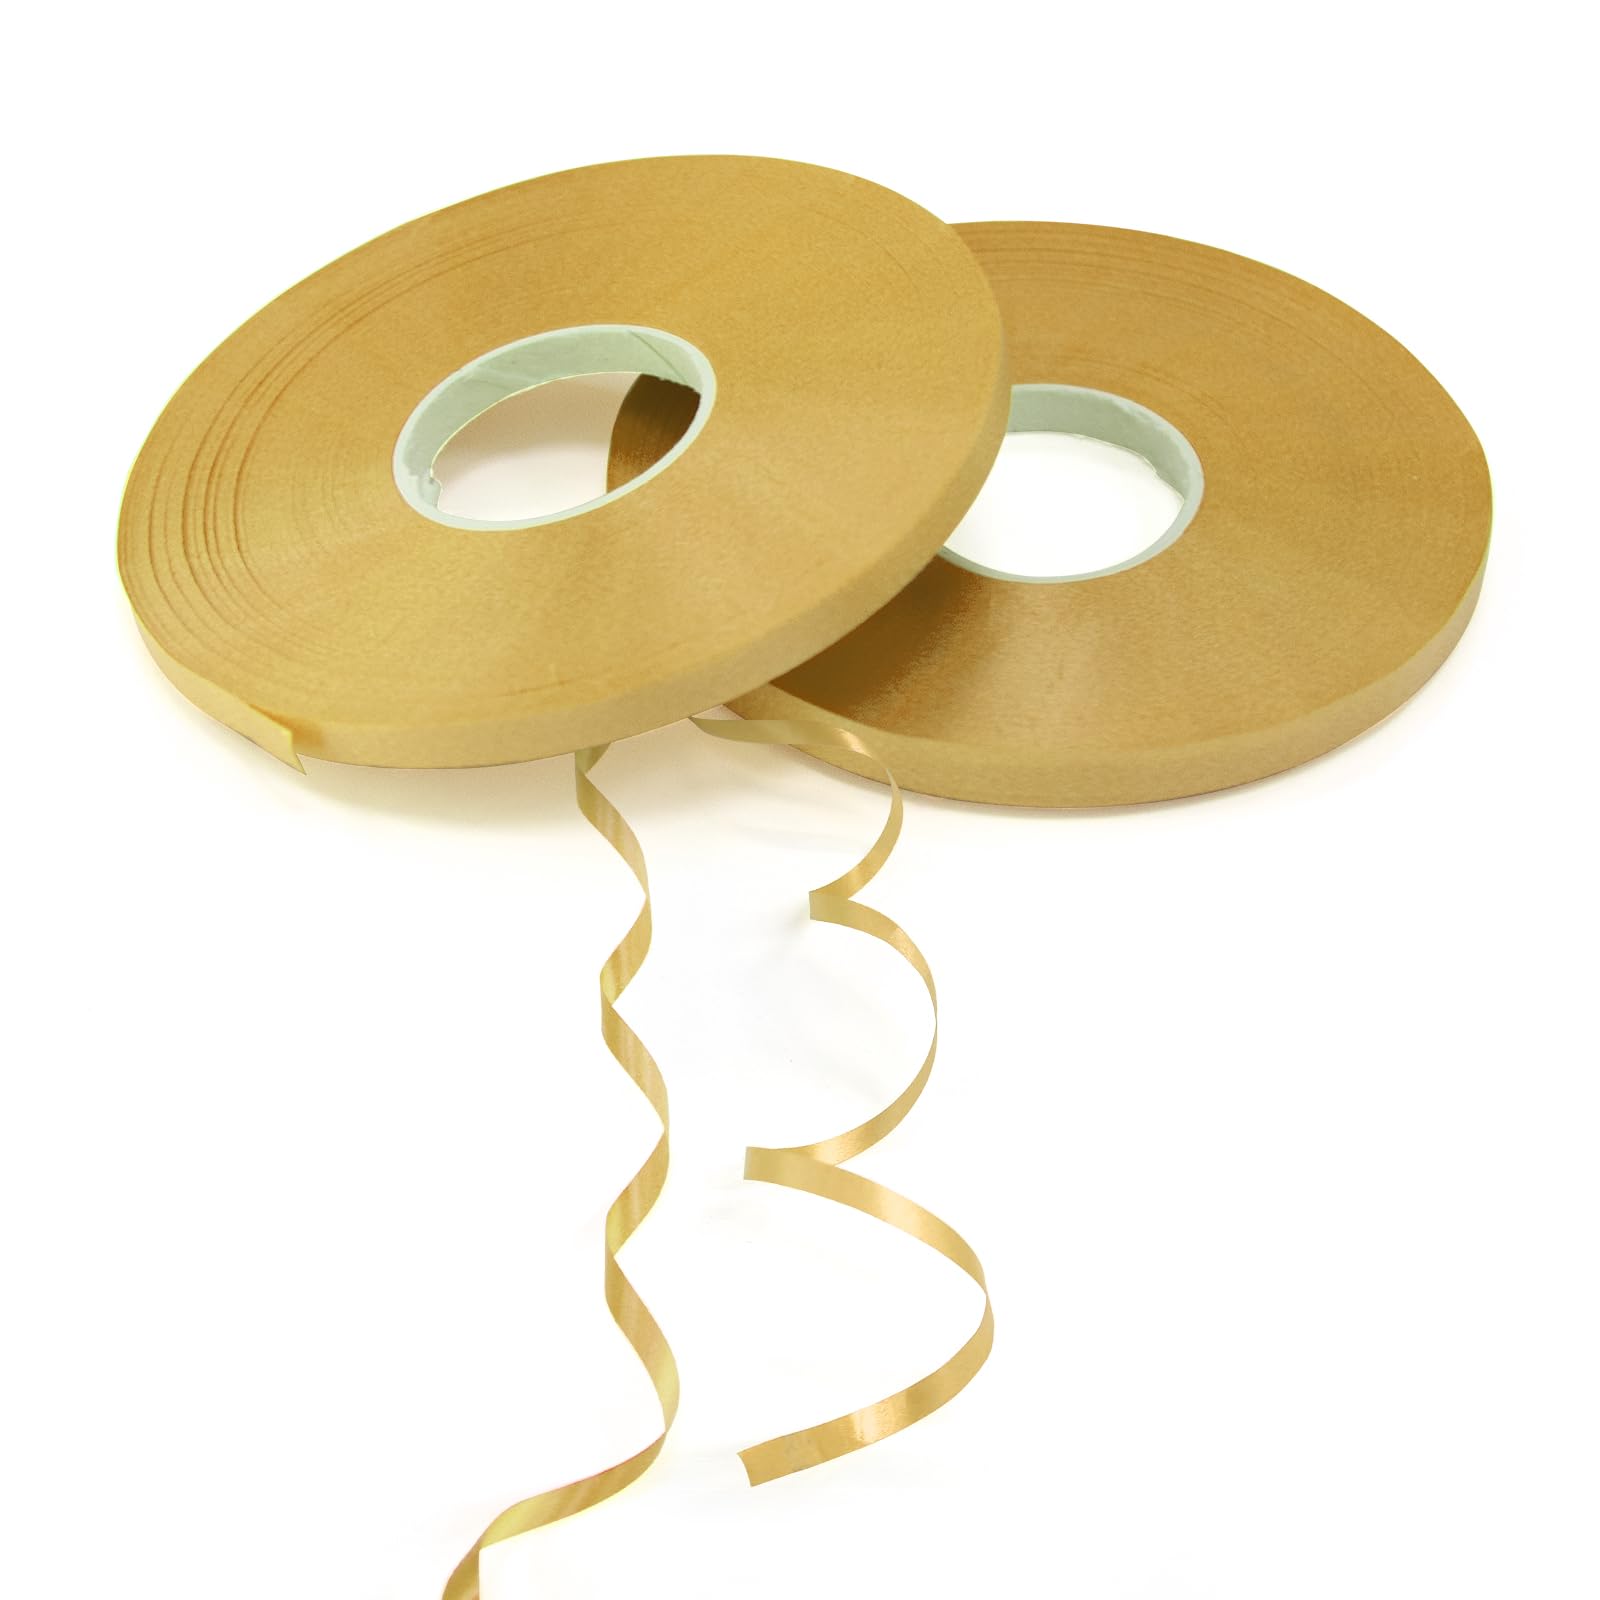 6 rollos de cinta metálica dorada, cinta de arte gráfica dorada  autoadhesiva de poliéster metalizado para decoración de manualidades,  decoración de